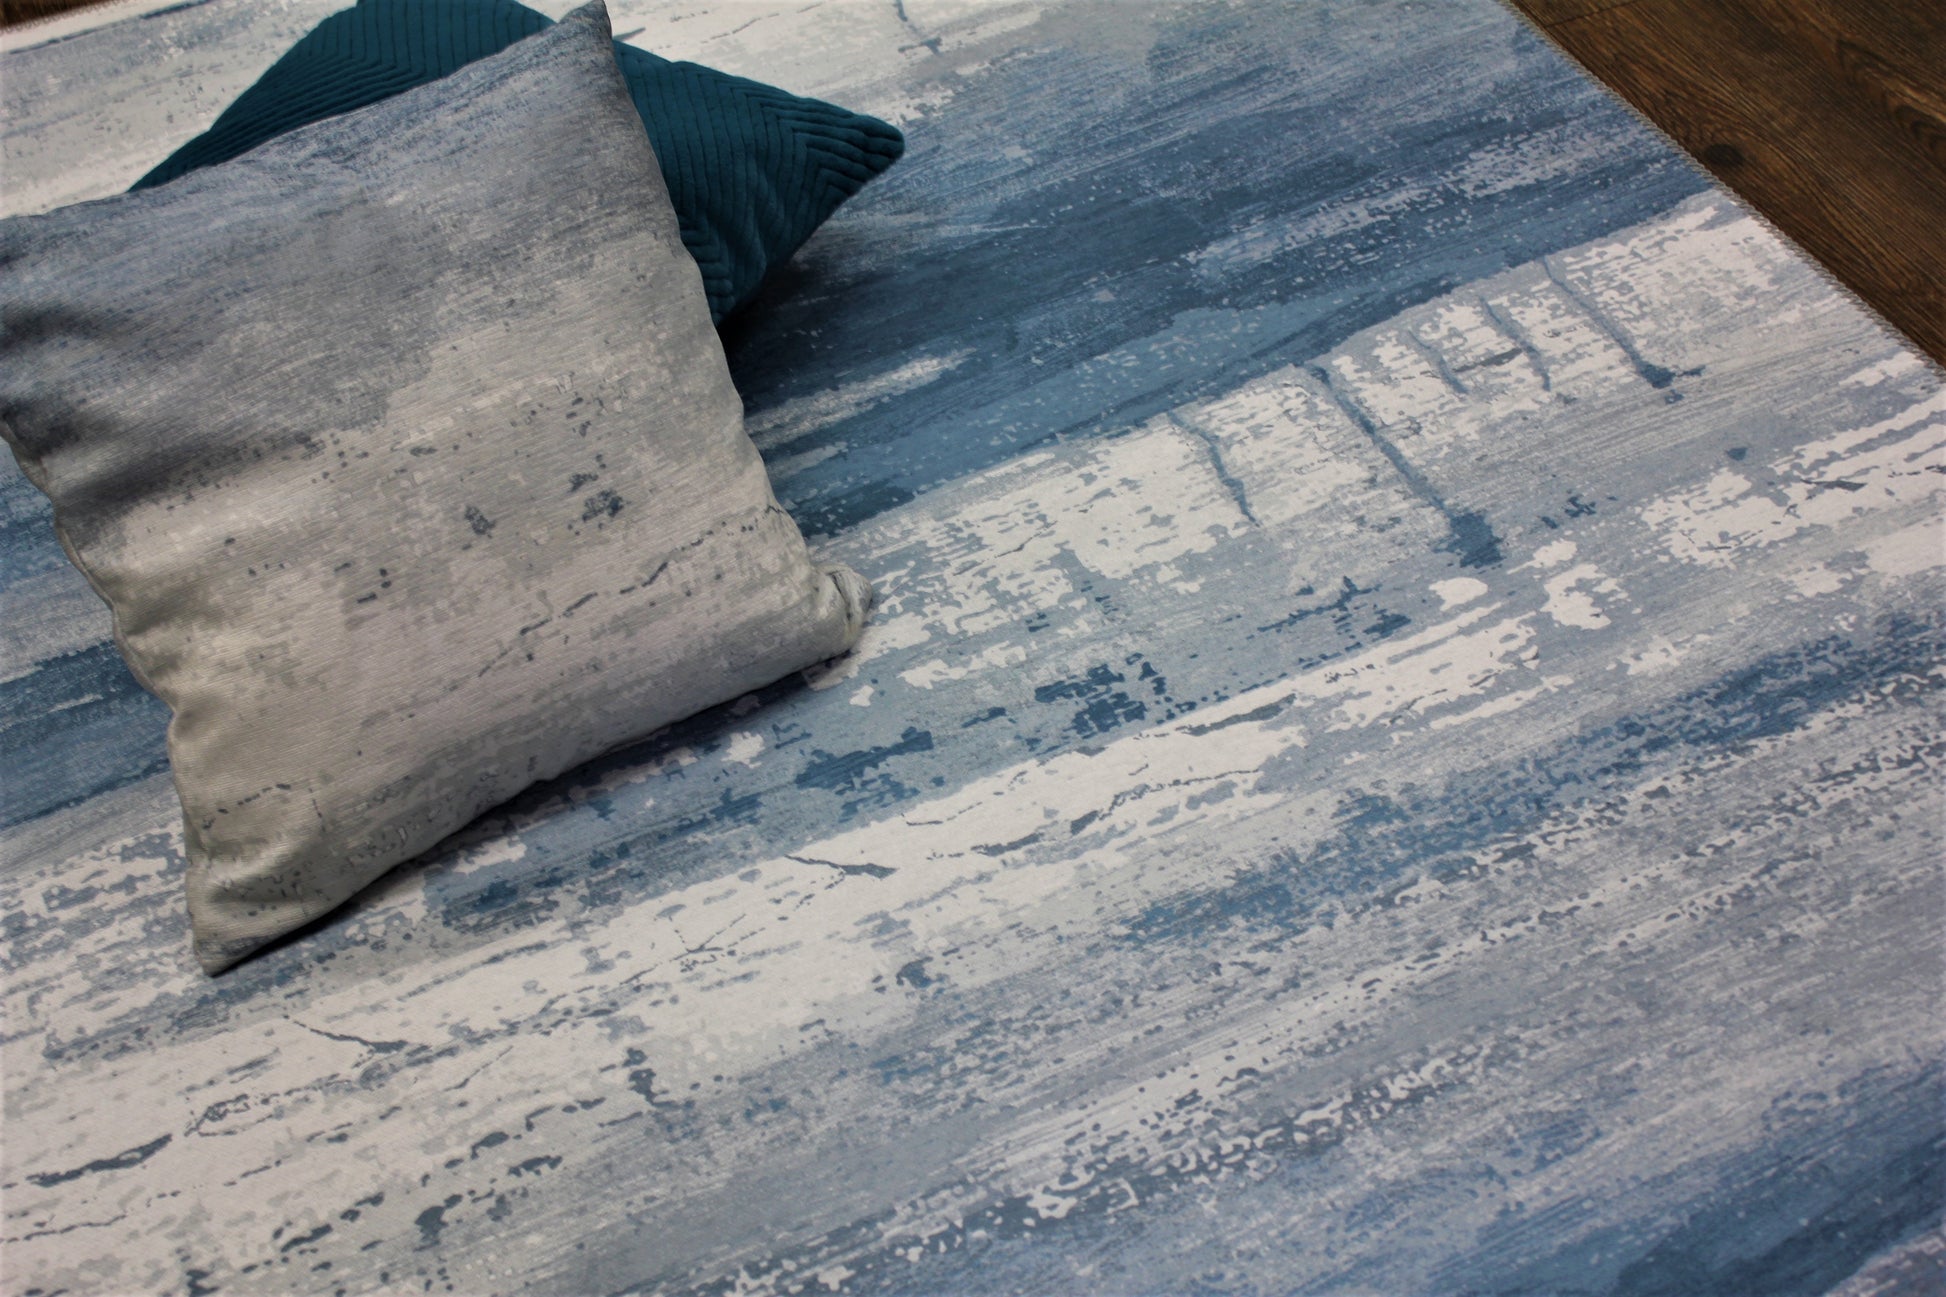 Blue Meadow Comfort Print Art Design Area Rug/ Carpet